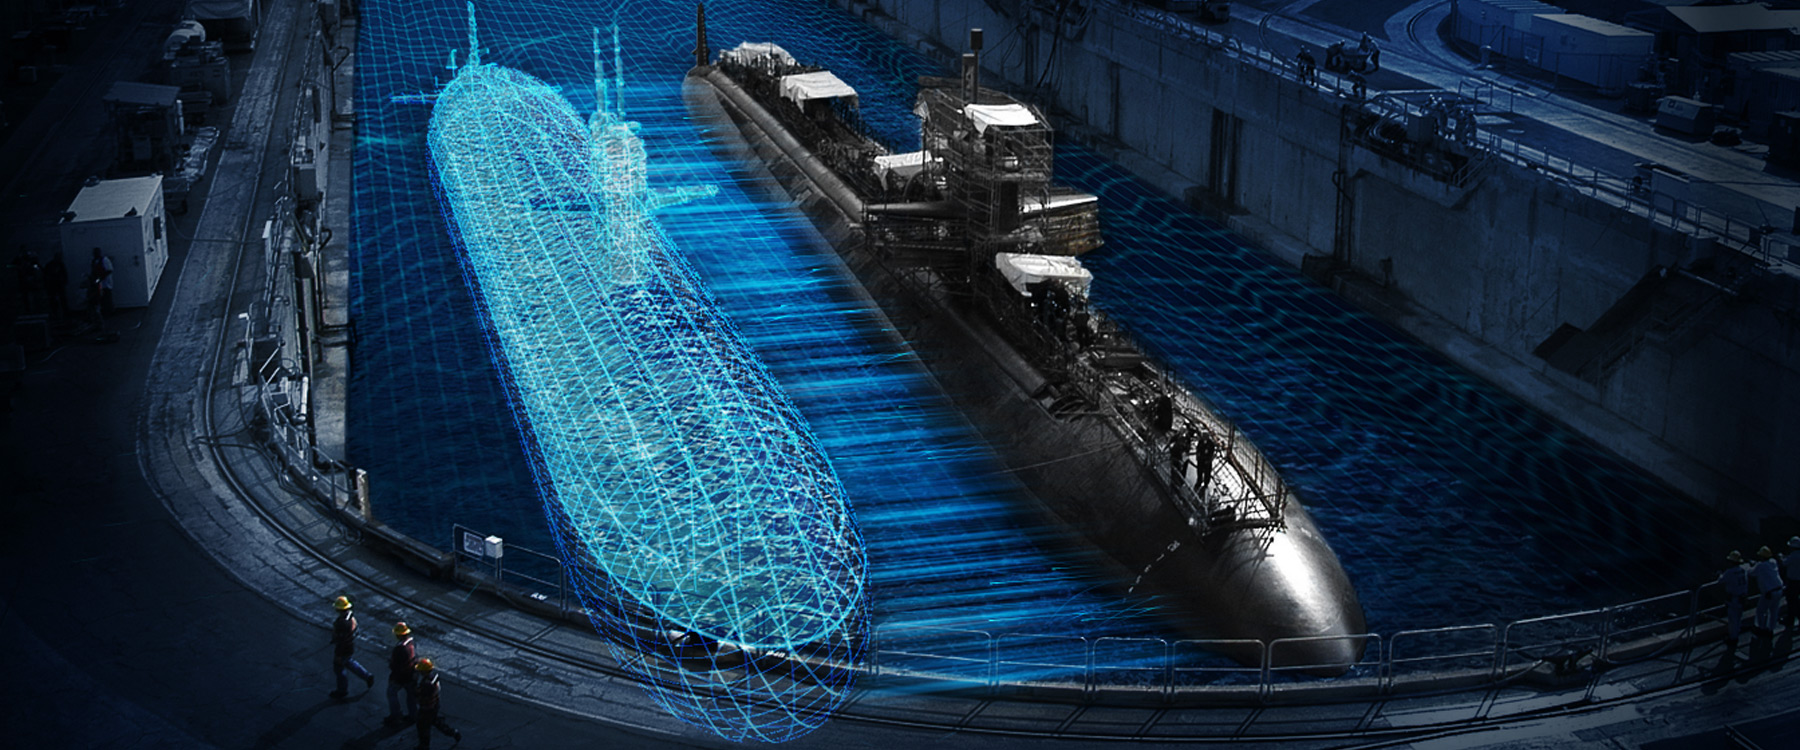 Digital twin to optimize U.S. Navy shipyards?